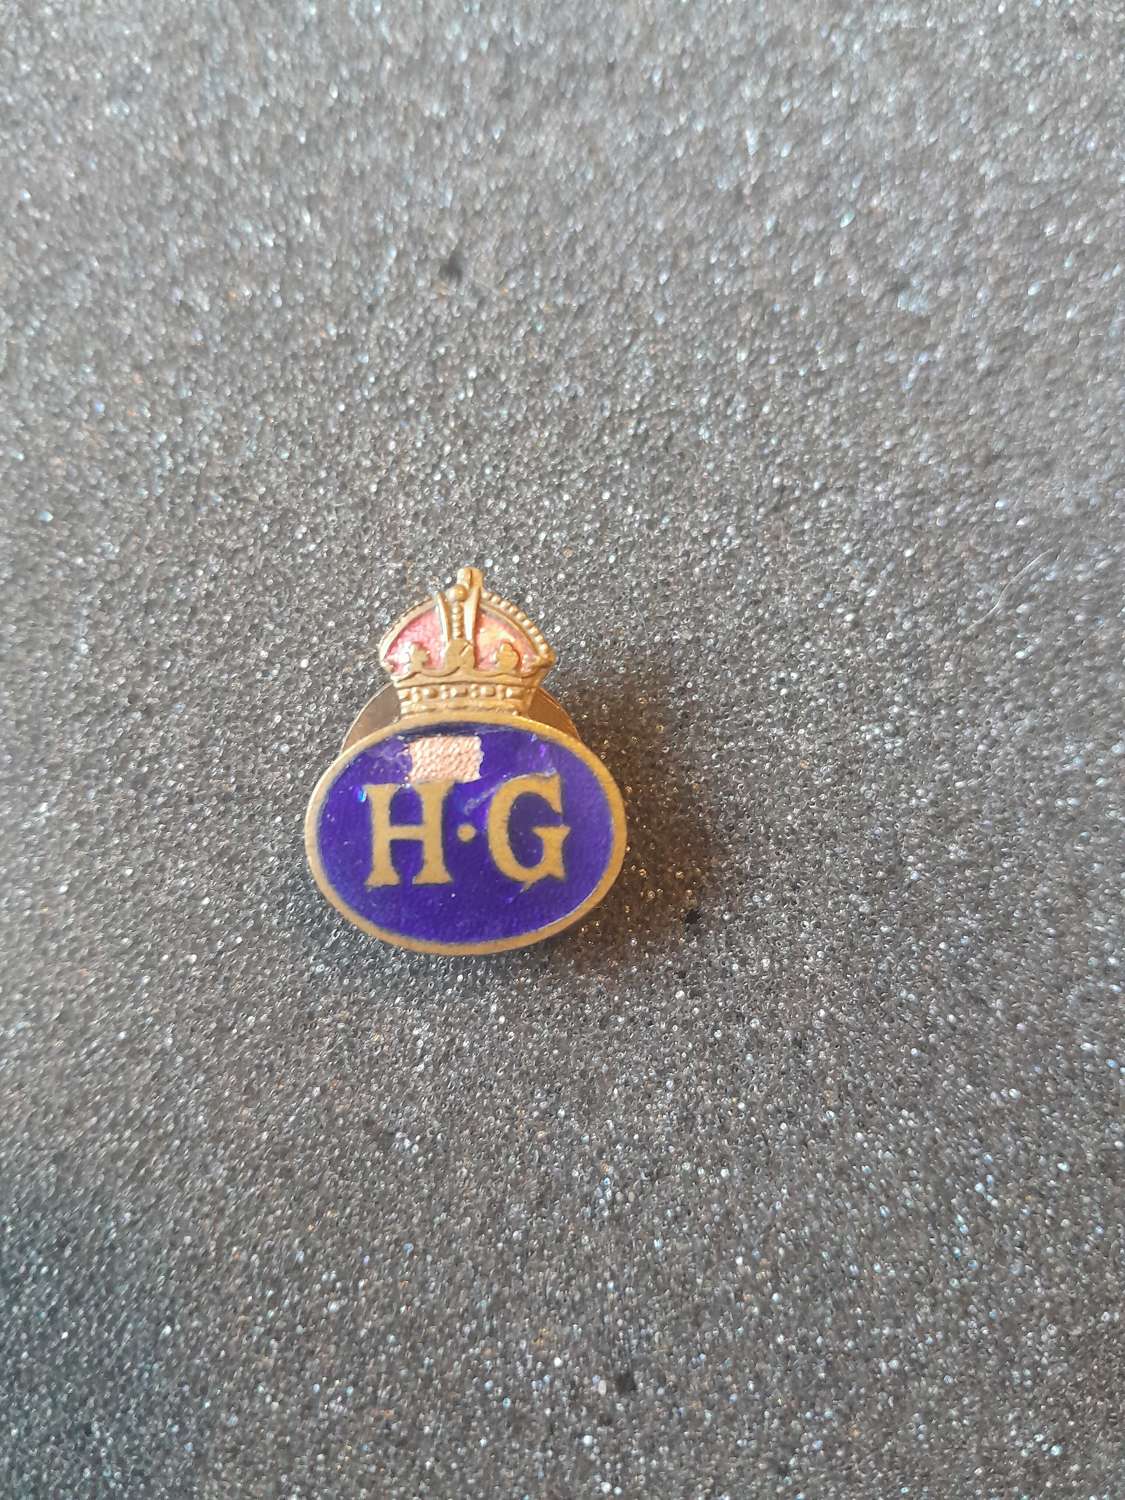 British 1940's Home Guard lapel badge